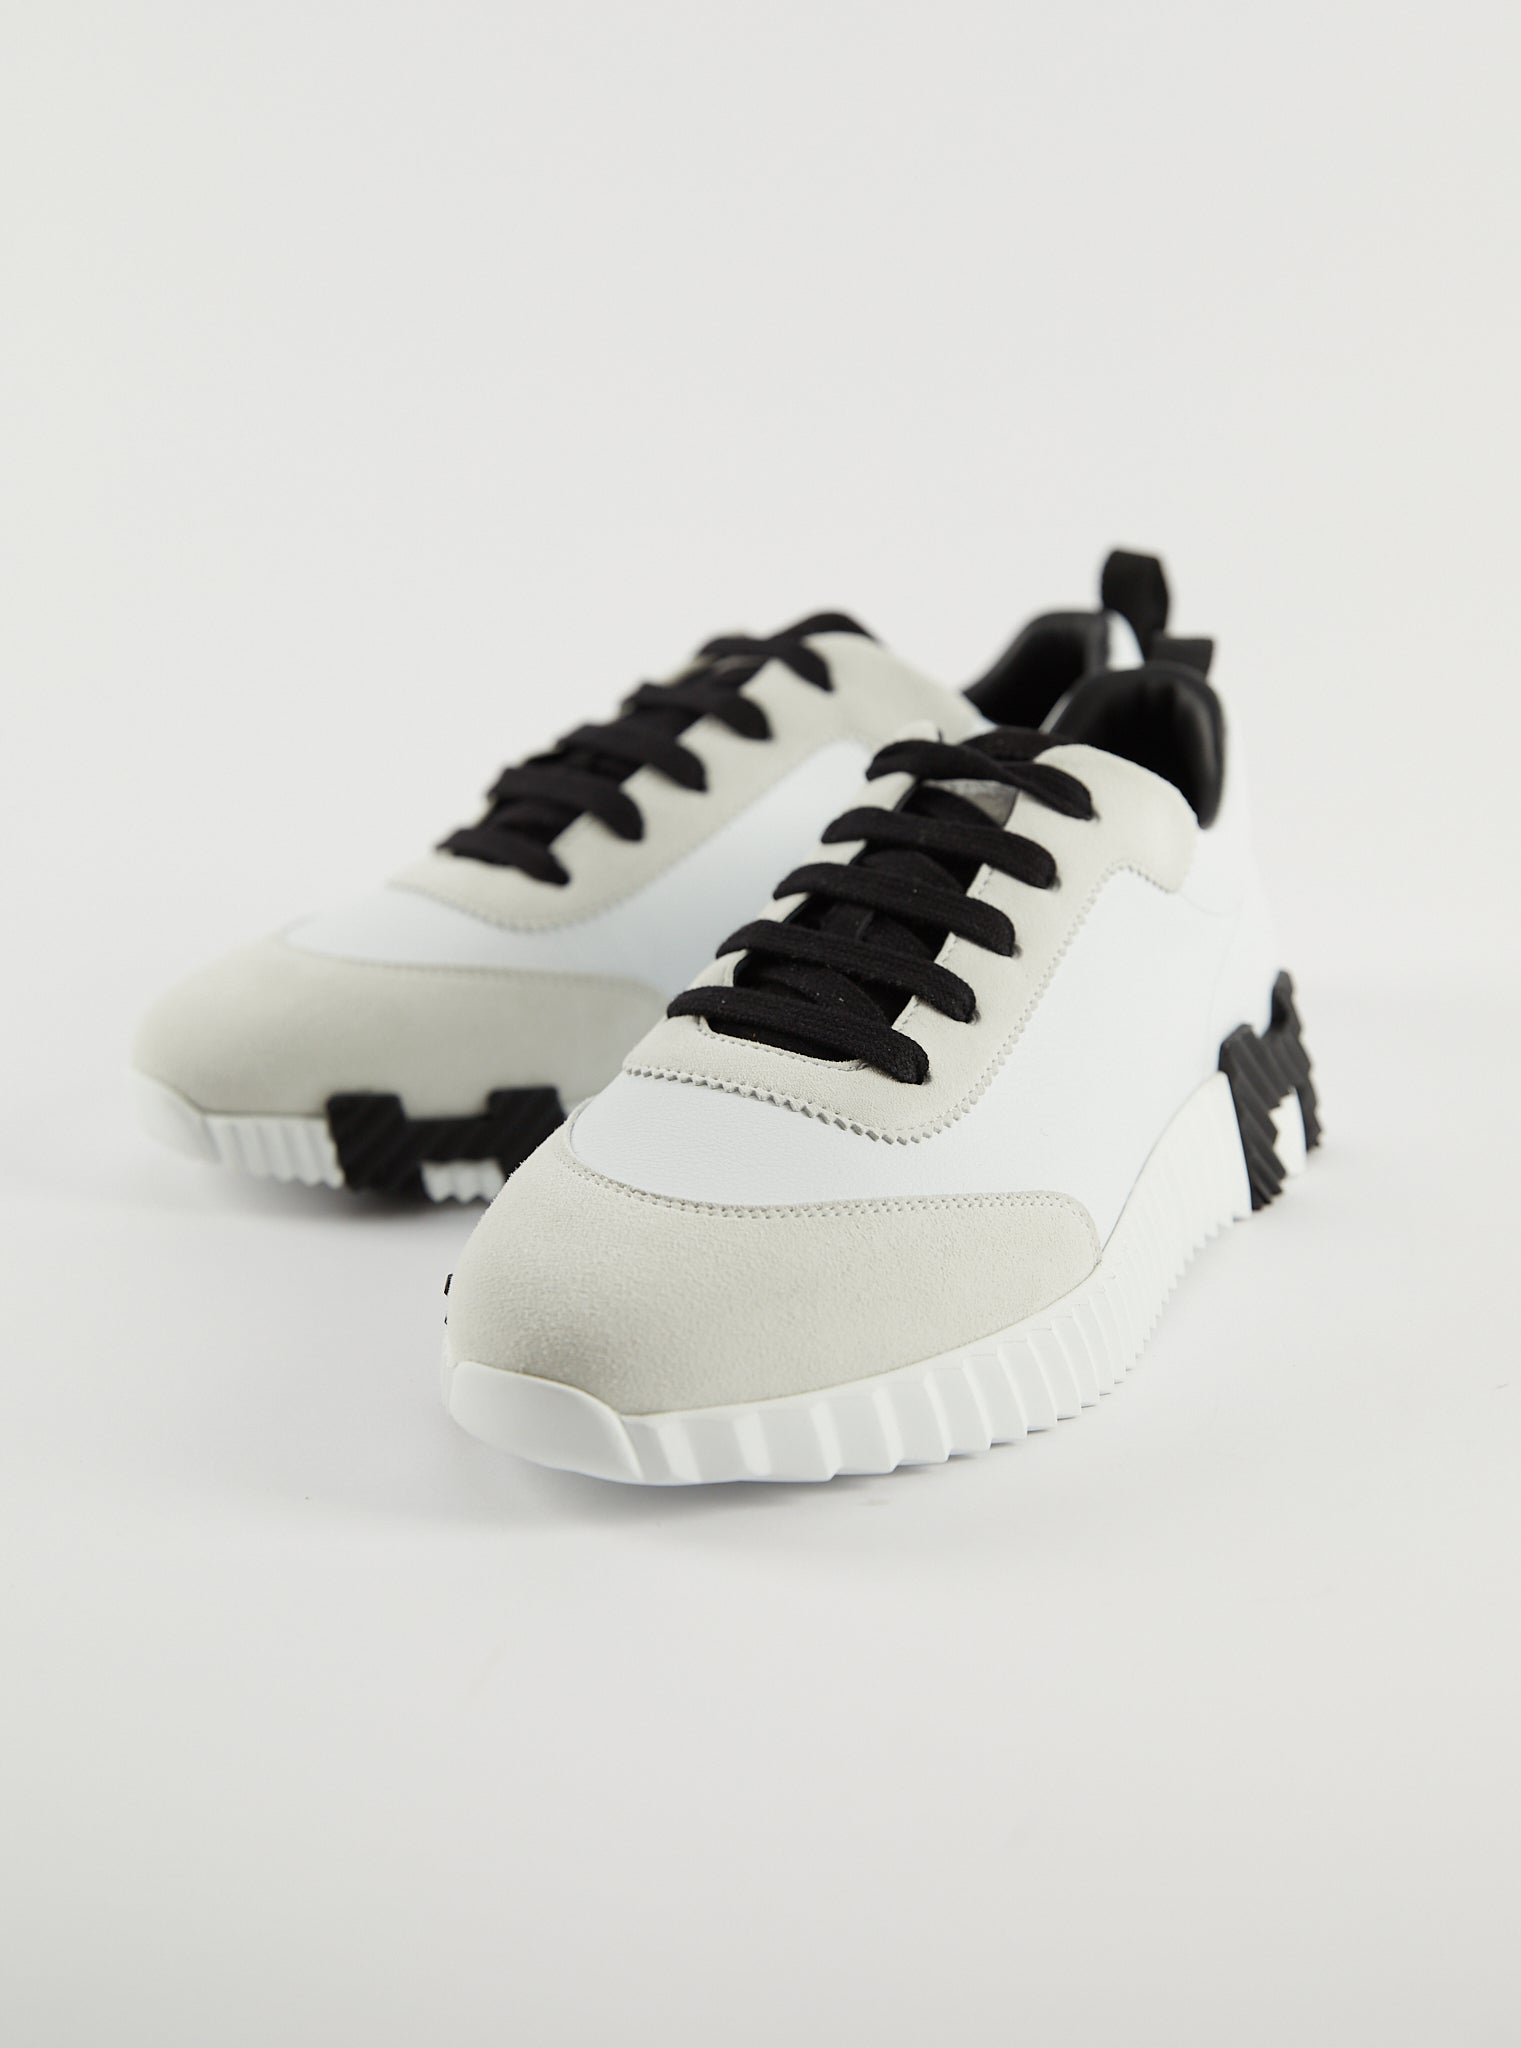 Hermès Bouncing Sneakers (White / Black)